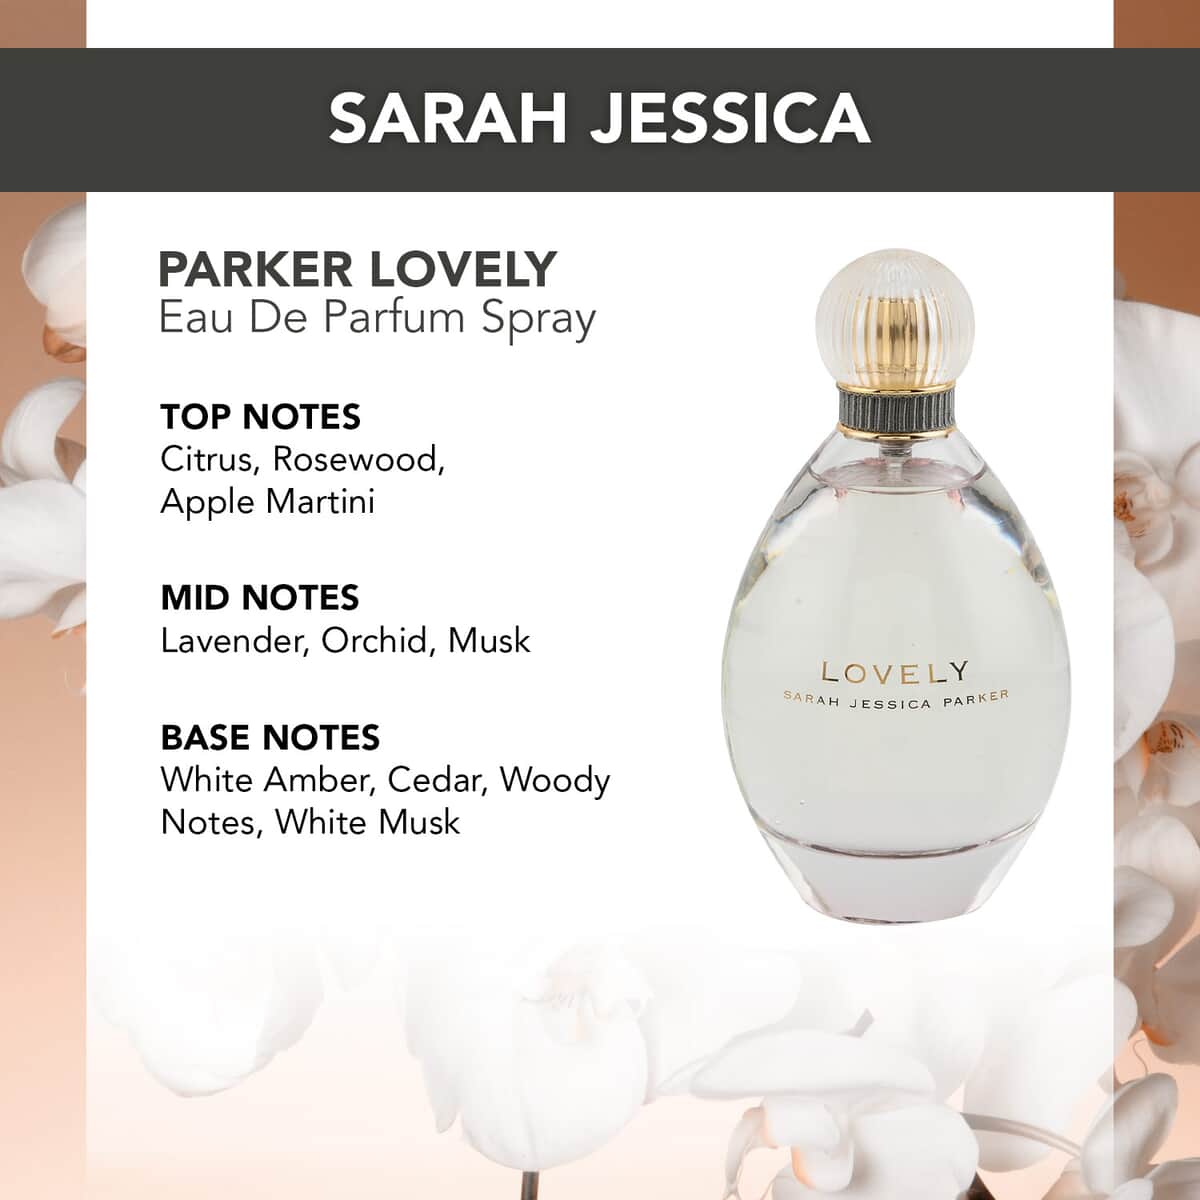 SARAH JESSICA PARKER LOVELY Eau De Parfum Spray 3.4 oz, Floral Lavender Musky Scent image number 3